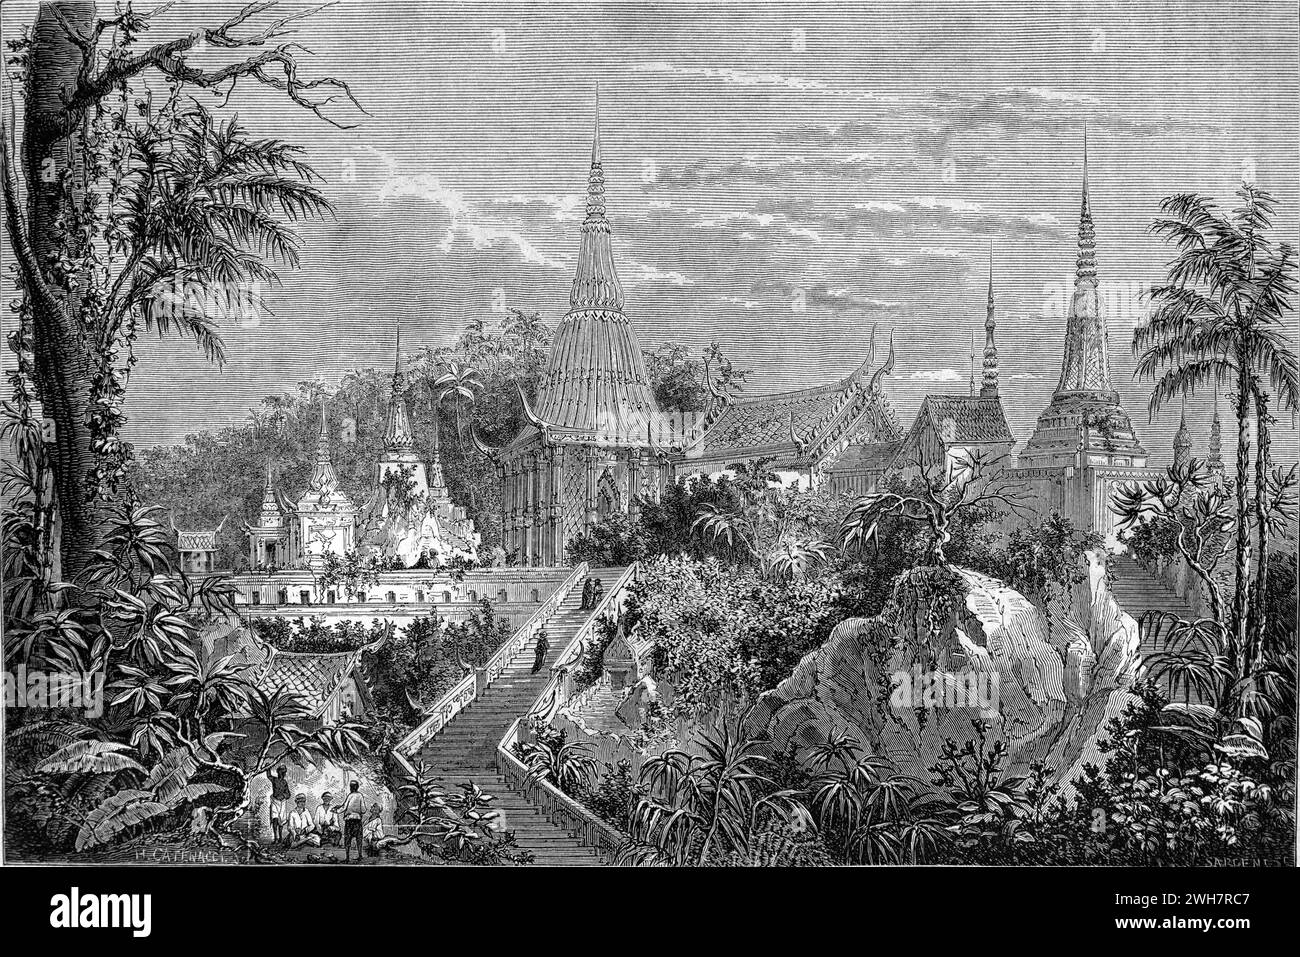 Wat Phrabat Nam Phu Temple or Monastery Topburi near Bangkok Thailand. Vintage or Historic Engraving or Illustration 1863 Stock Photo